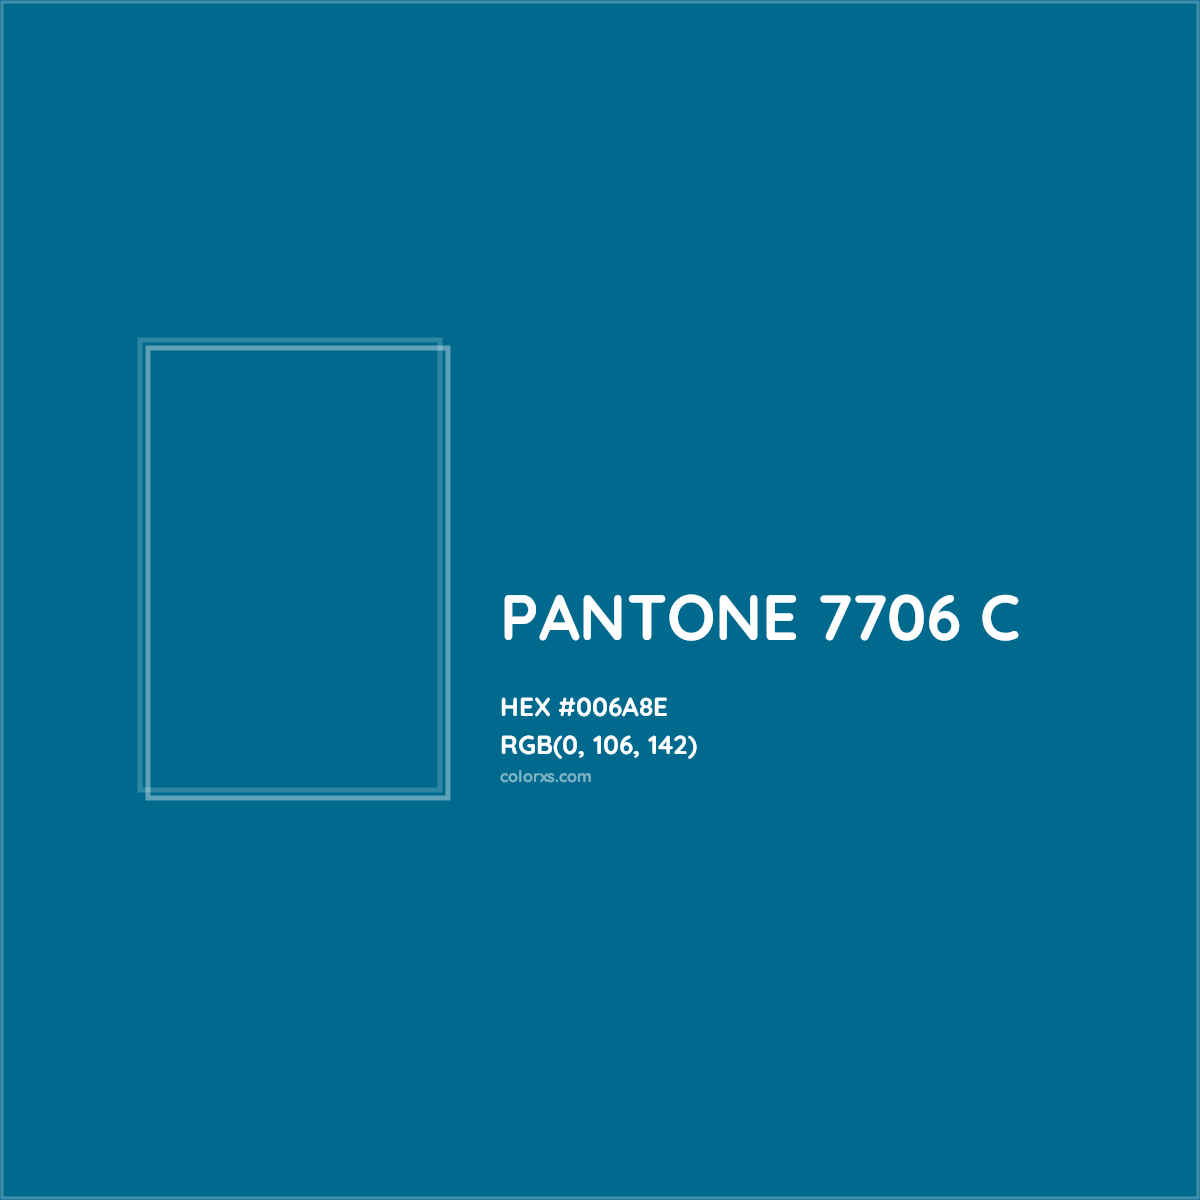 HEX #006A8E PANTONE 7706 C CMS Pantone PMS - Color Code